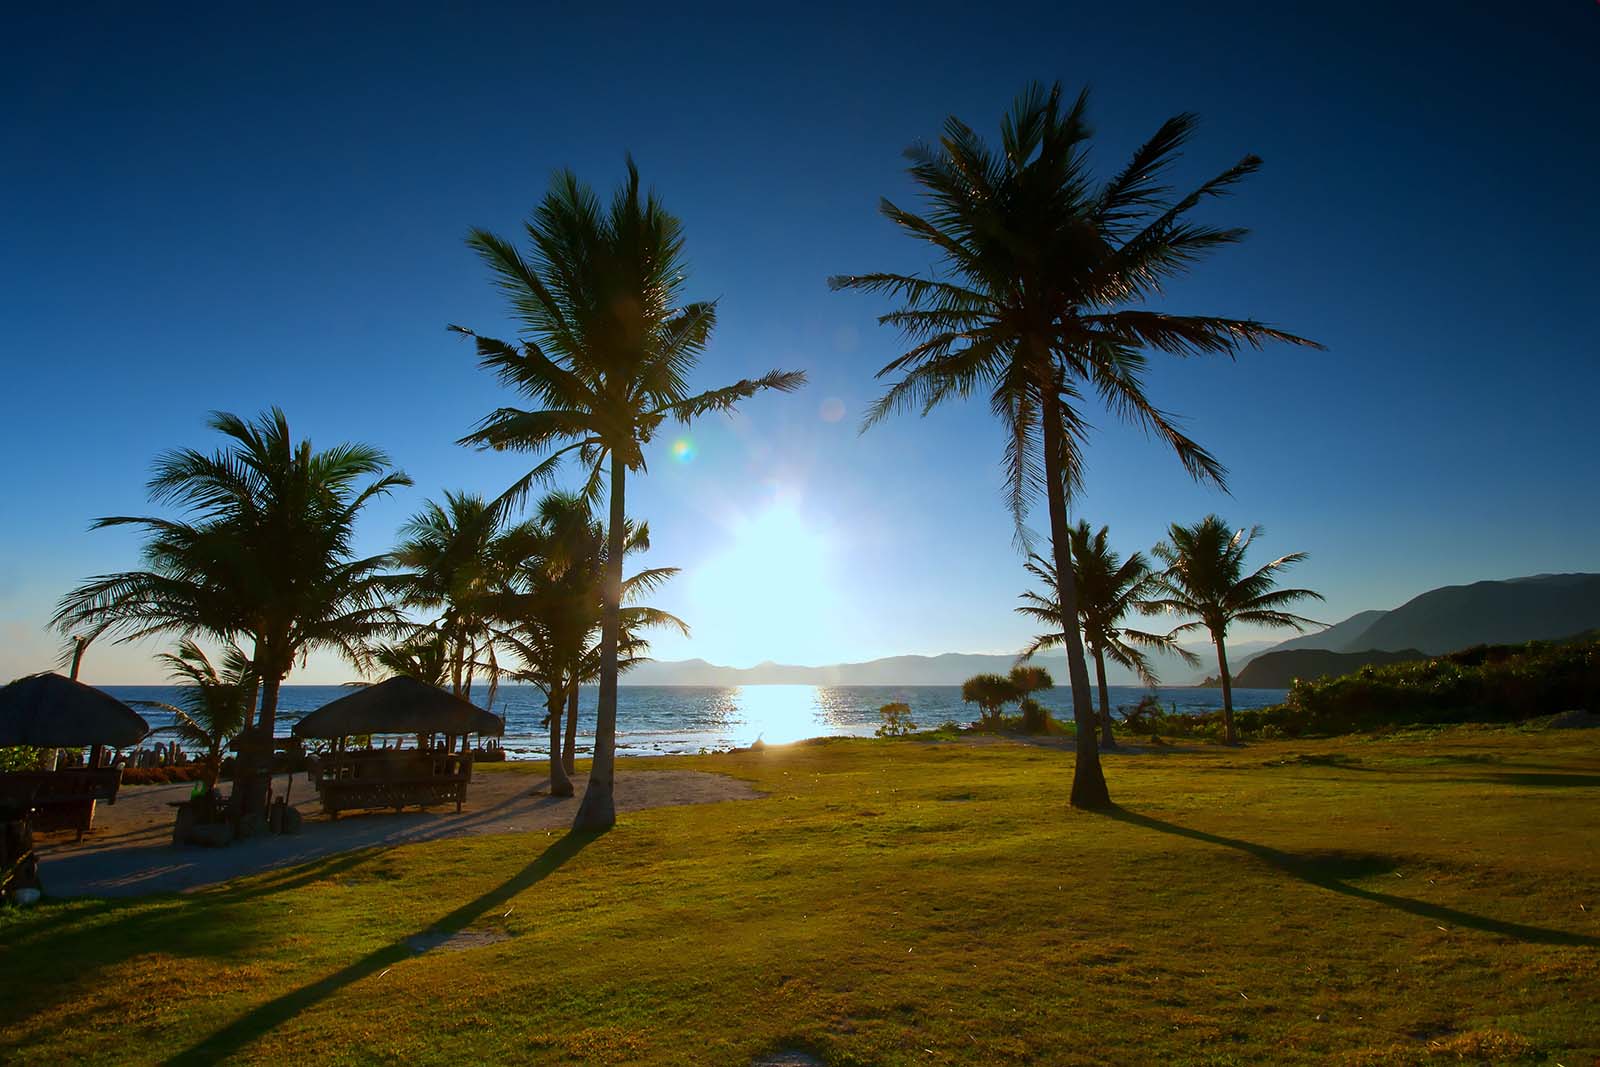 Casa Consuelo's expansive beachfront lawn